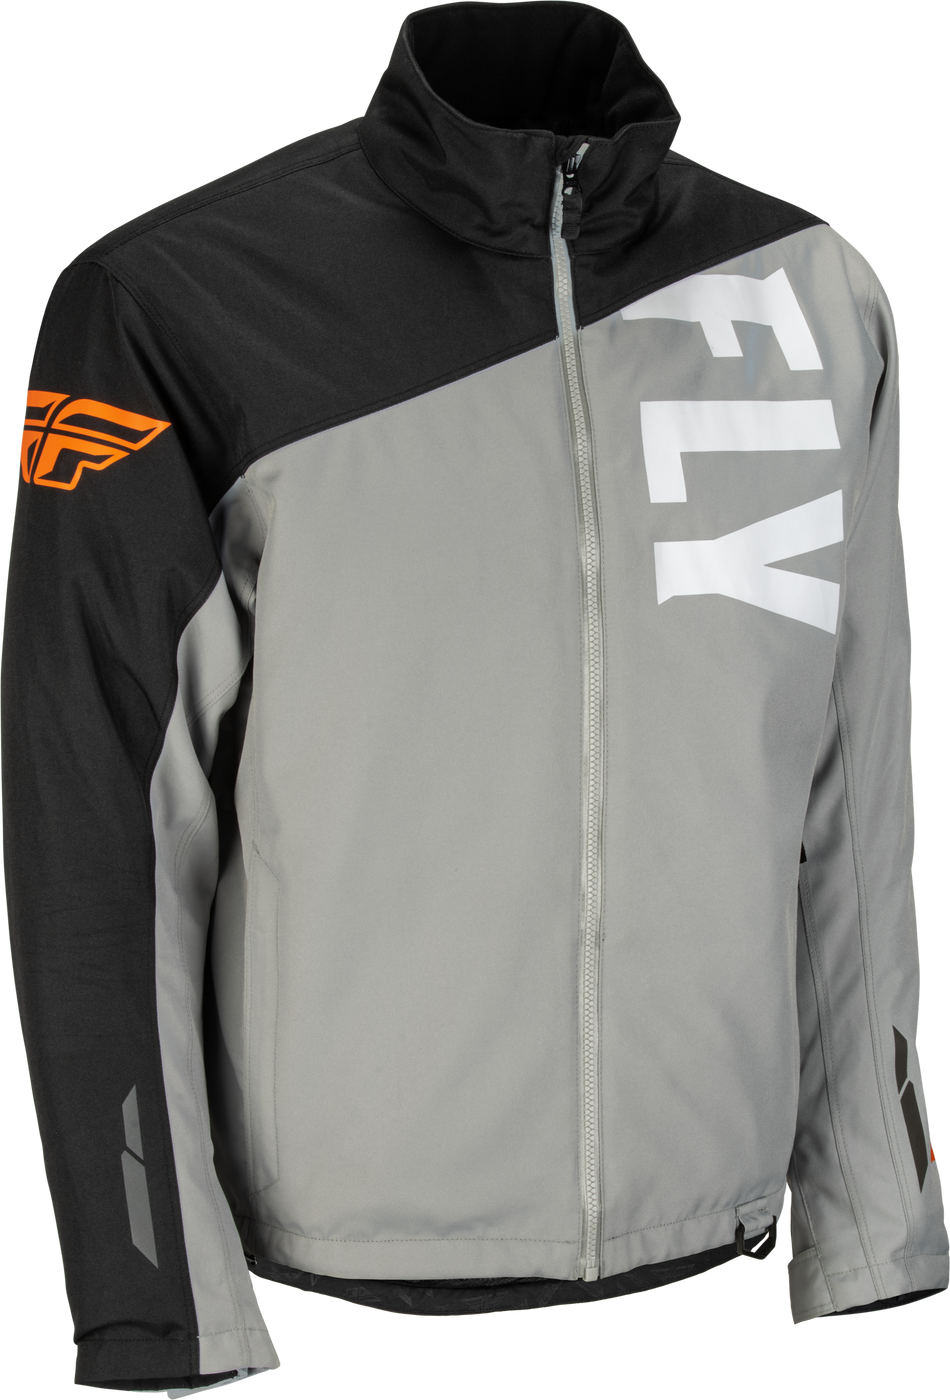 FLY RACING Aurora Jacket Grey/Black/Orange Sm 470-4123S